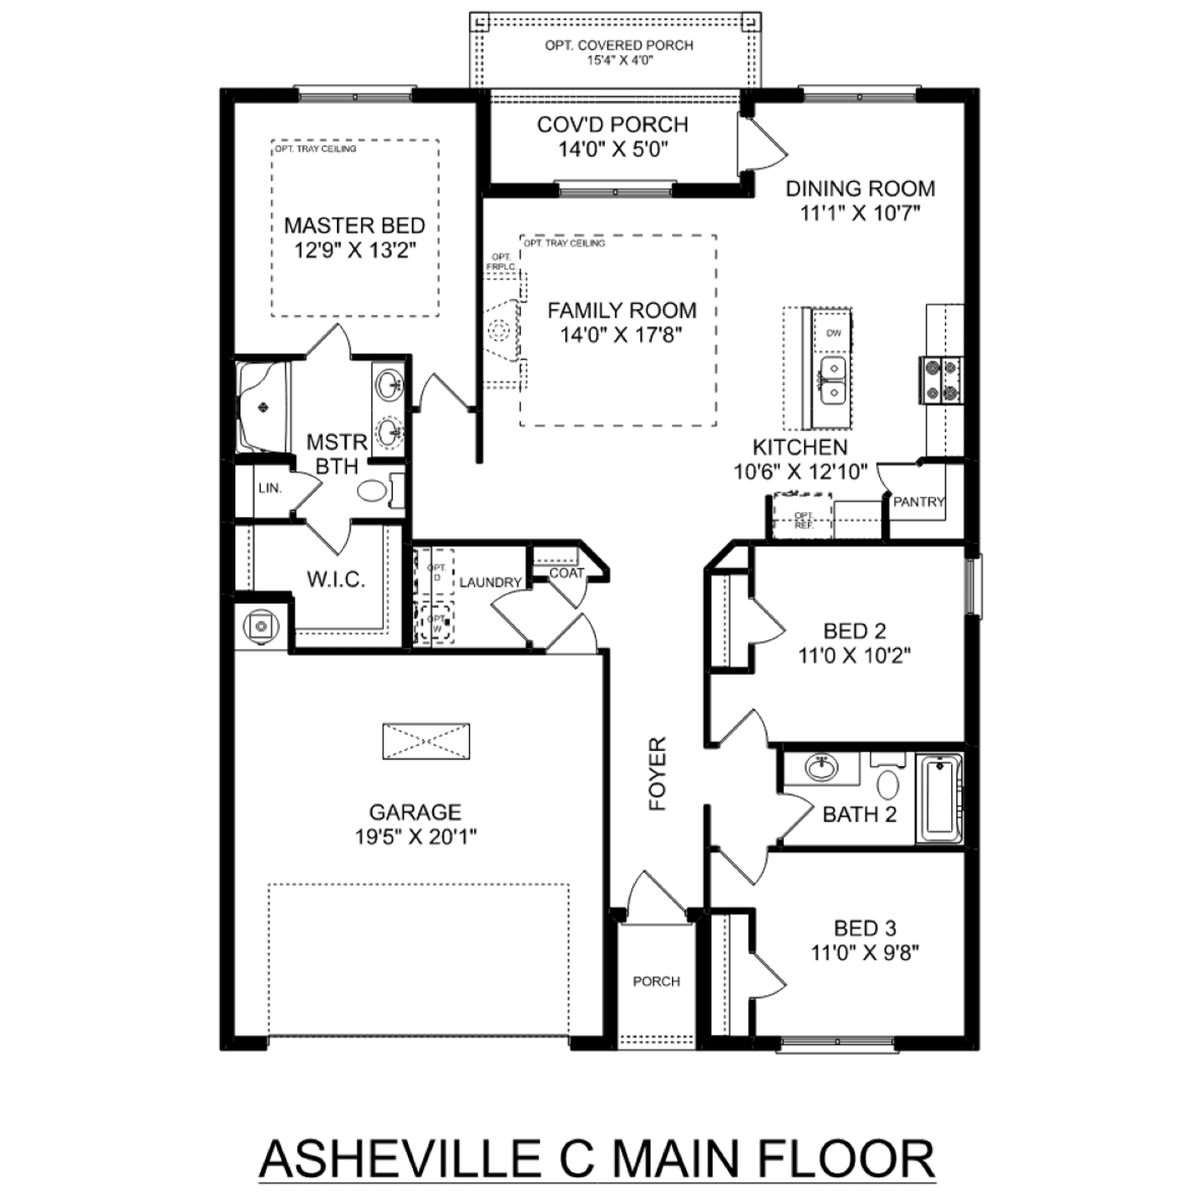 1 - The Asheville C floor plan layout for 27241 Mckenna Drive in Davidson Homes' Mallard Landing community.